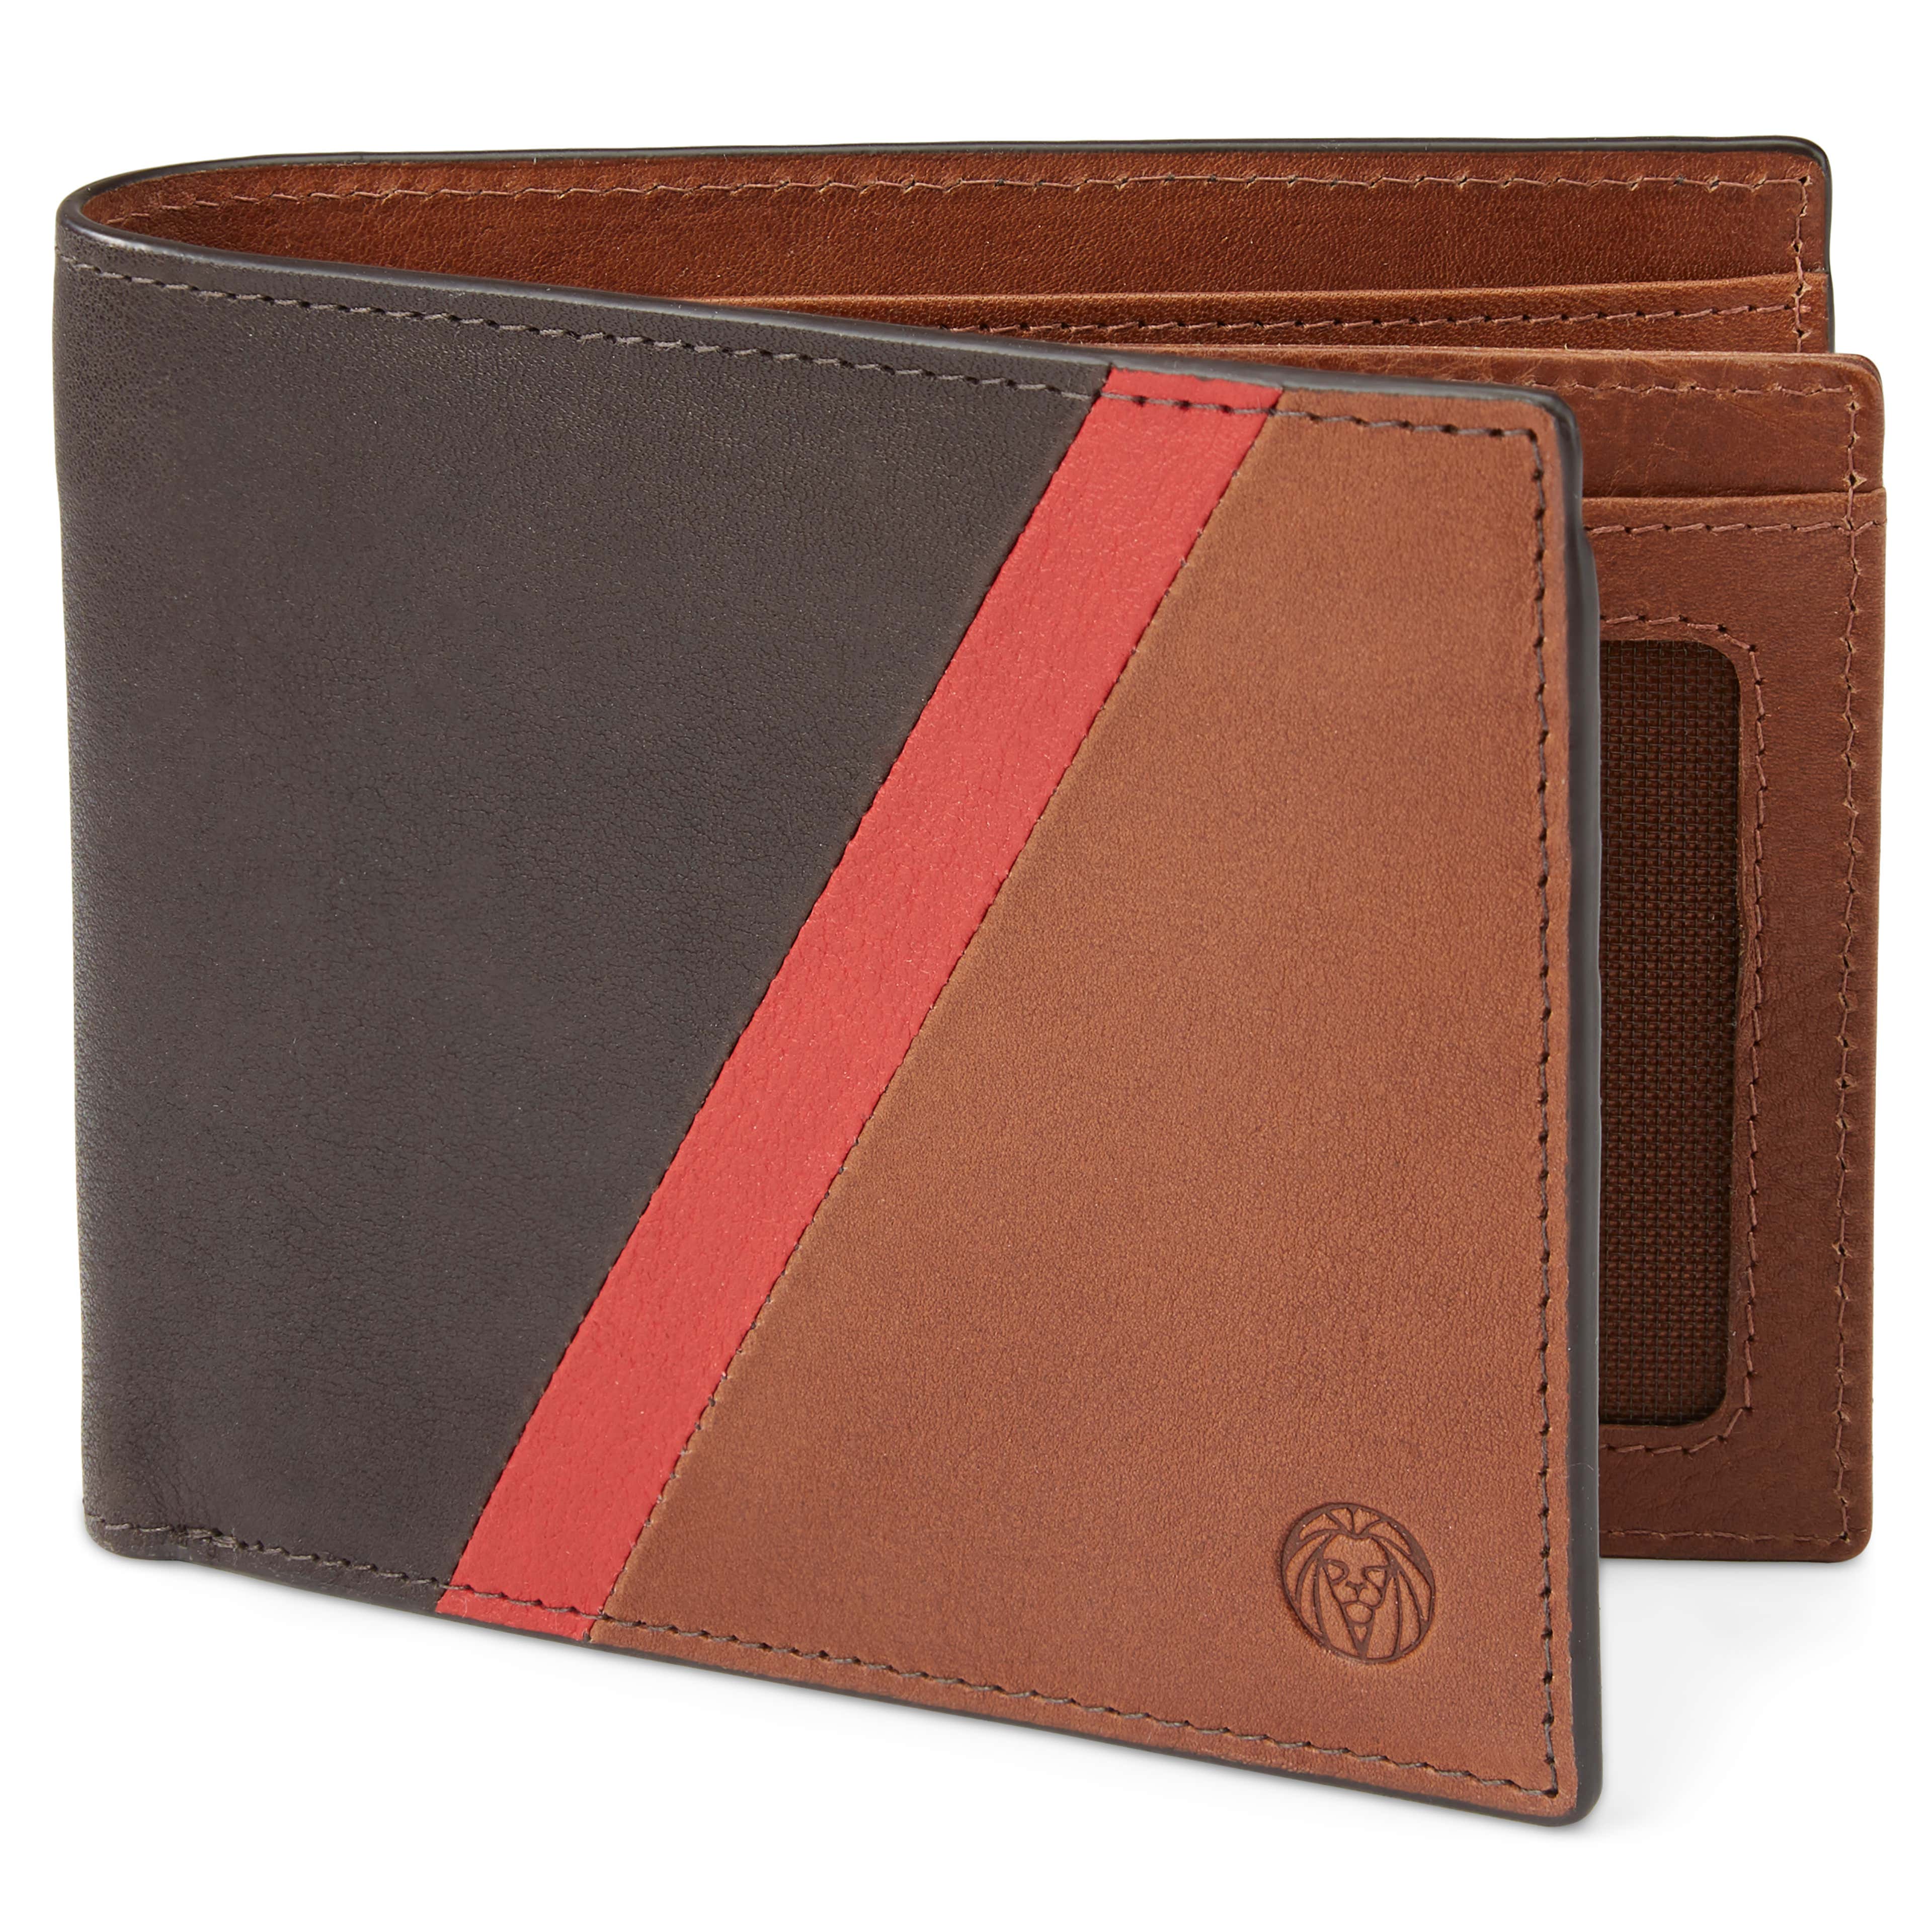 Lind Tan & Red Stripe Leather RFID-Blocking Wallet